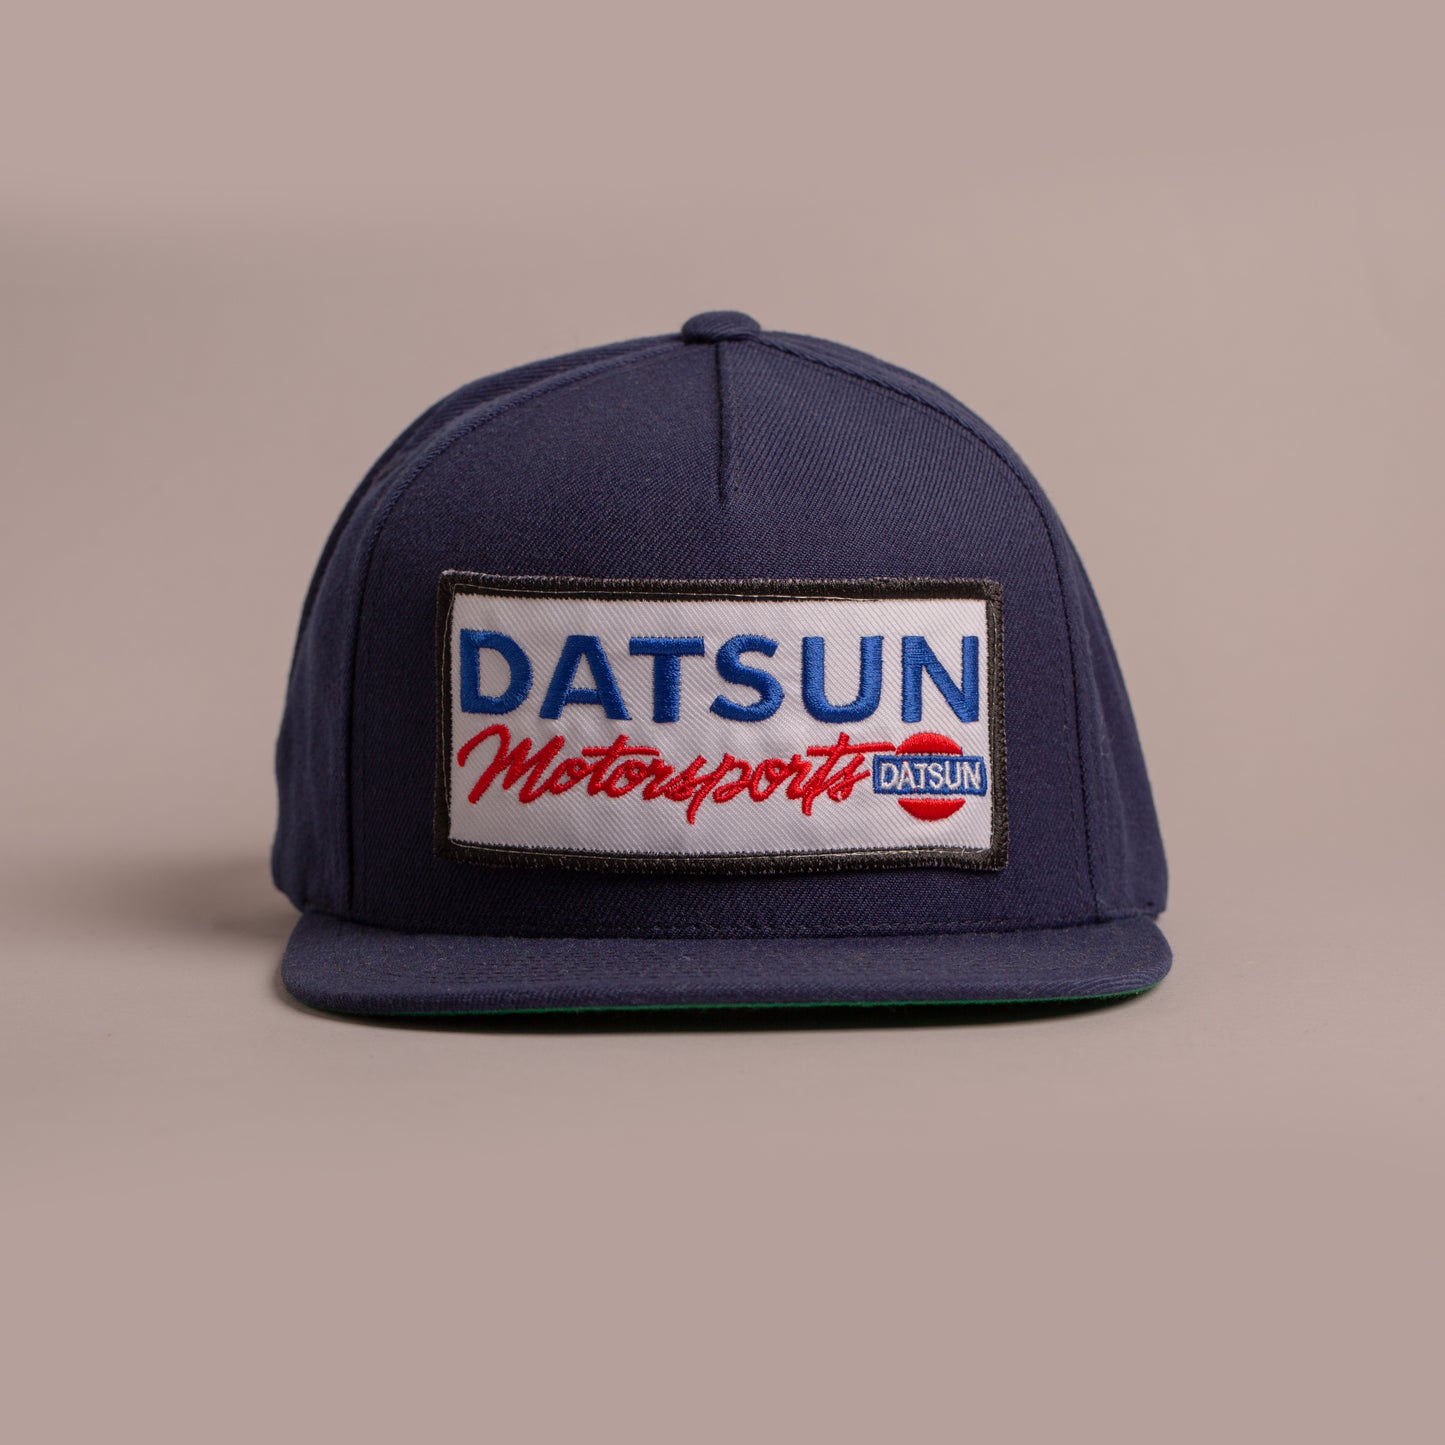 Datsun Motorsports